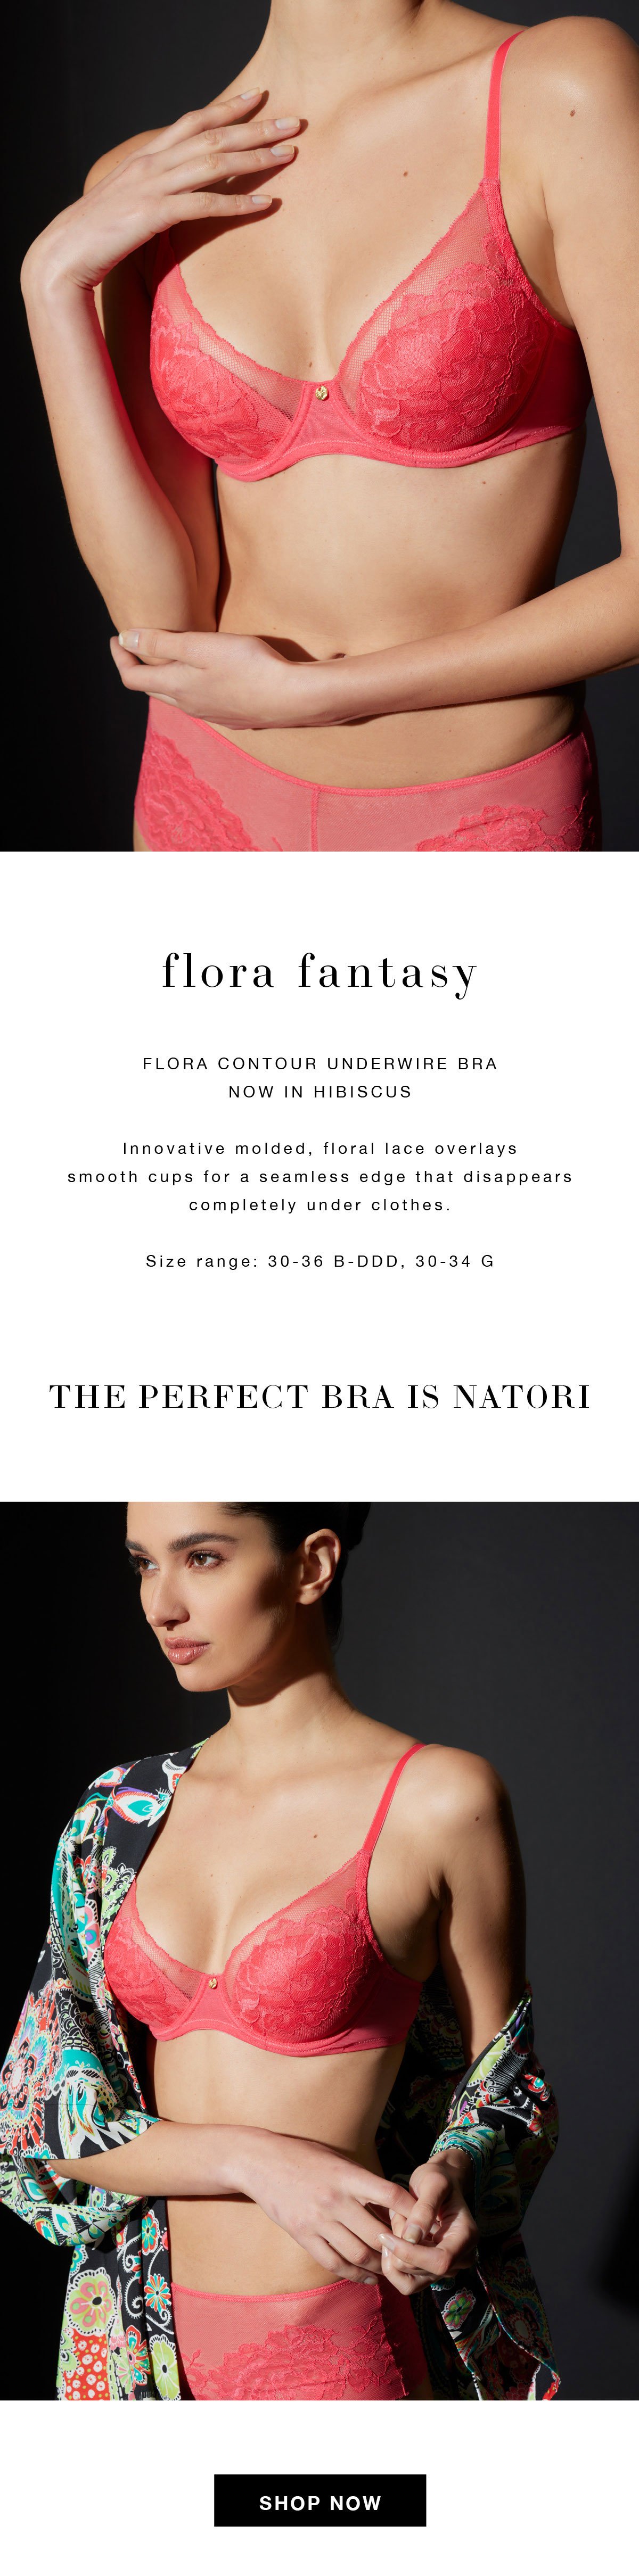 Natori: The Favorite Flora Bra: New in Hibiscus